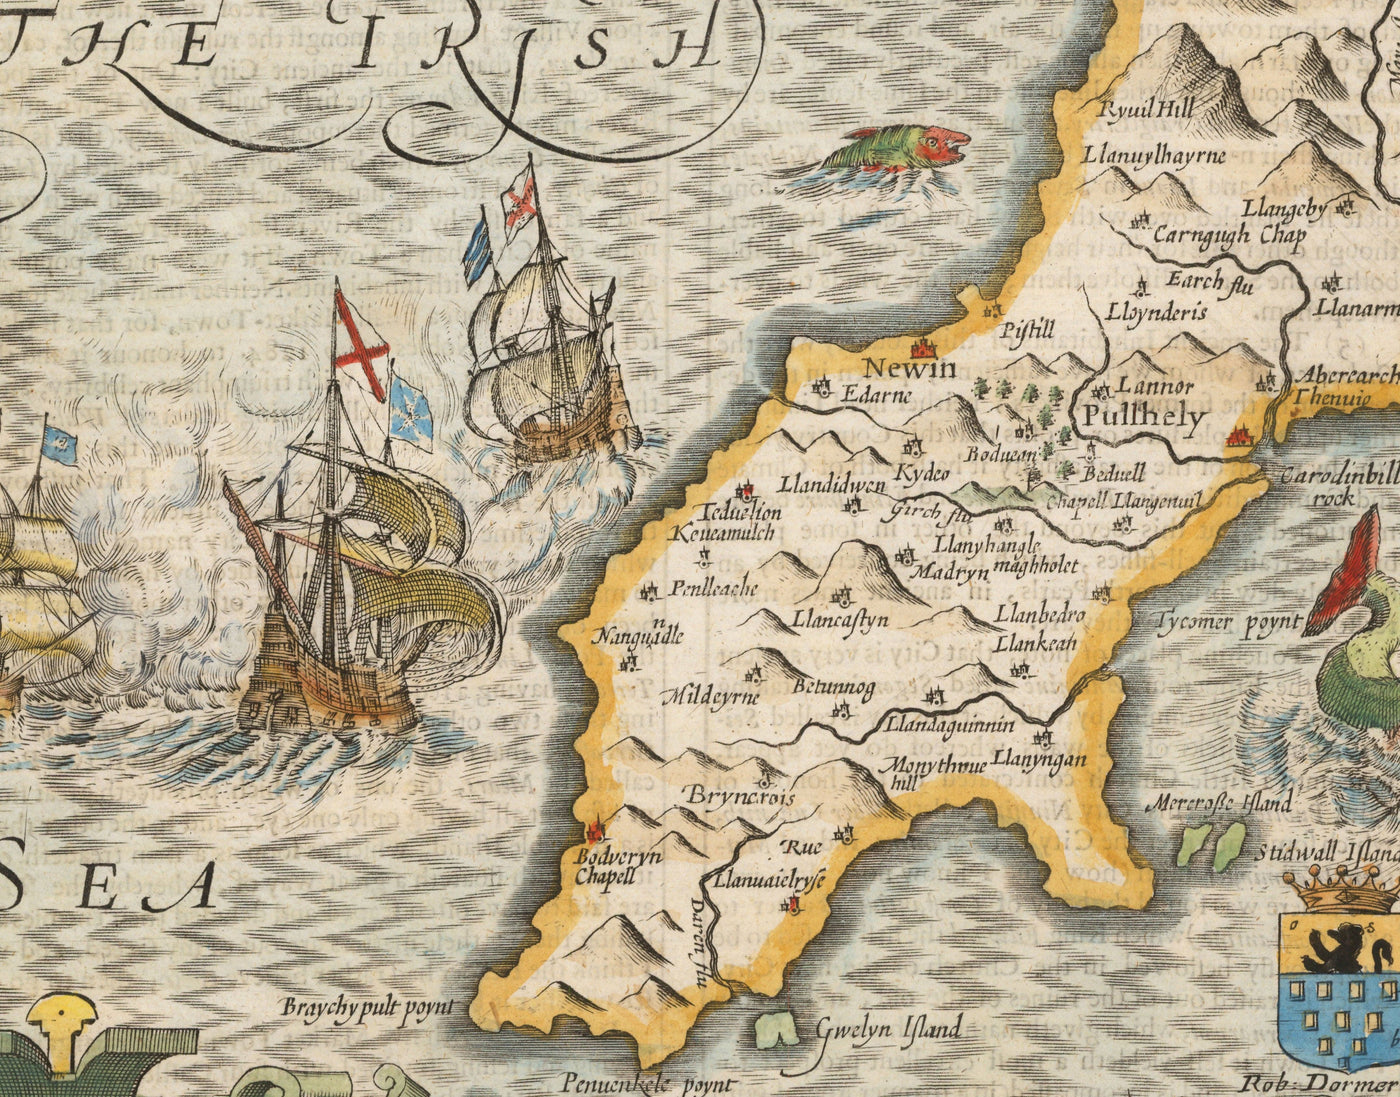 Alte Karte von Caernarfonshire Wales, 1611 von John Speed - Caernarfon, Snowdon, Gwynedd, Bangor, Conwy, Llandudno